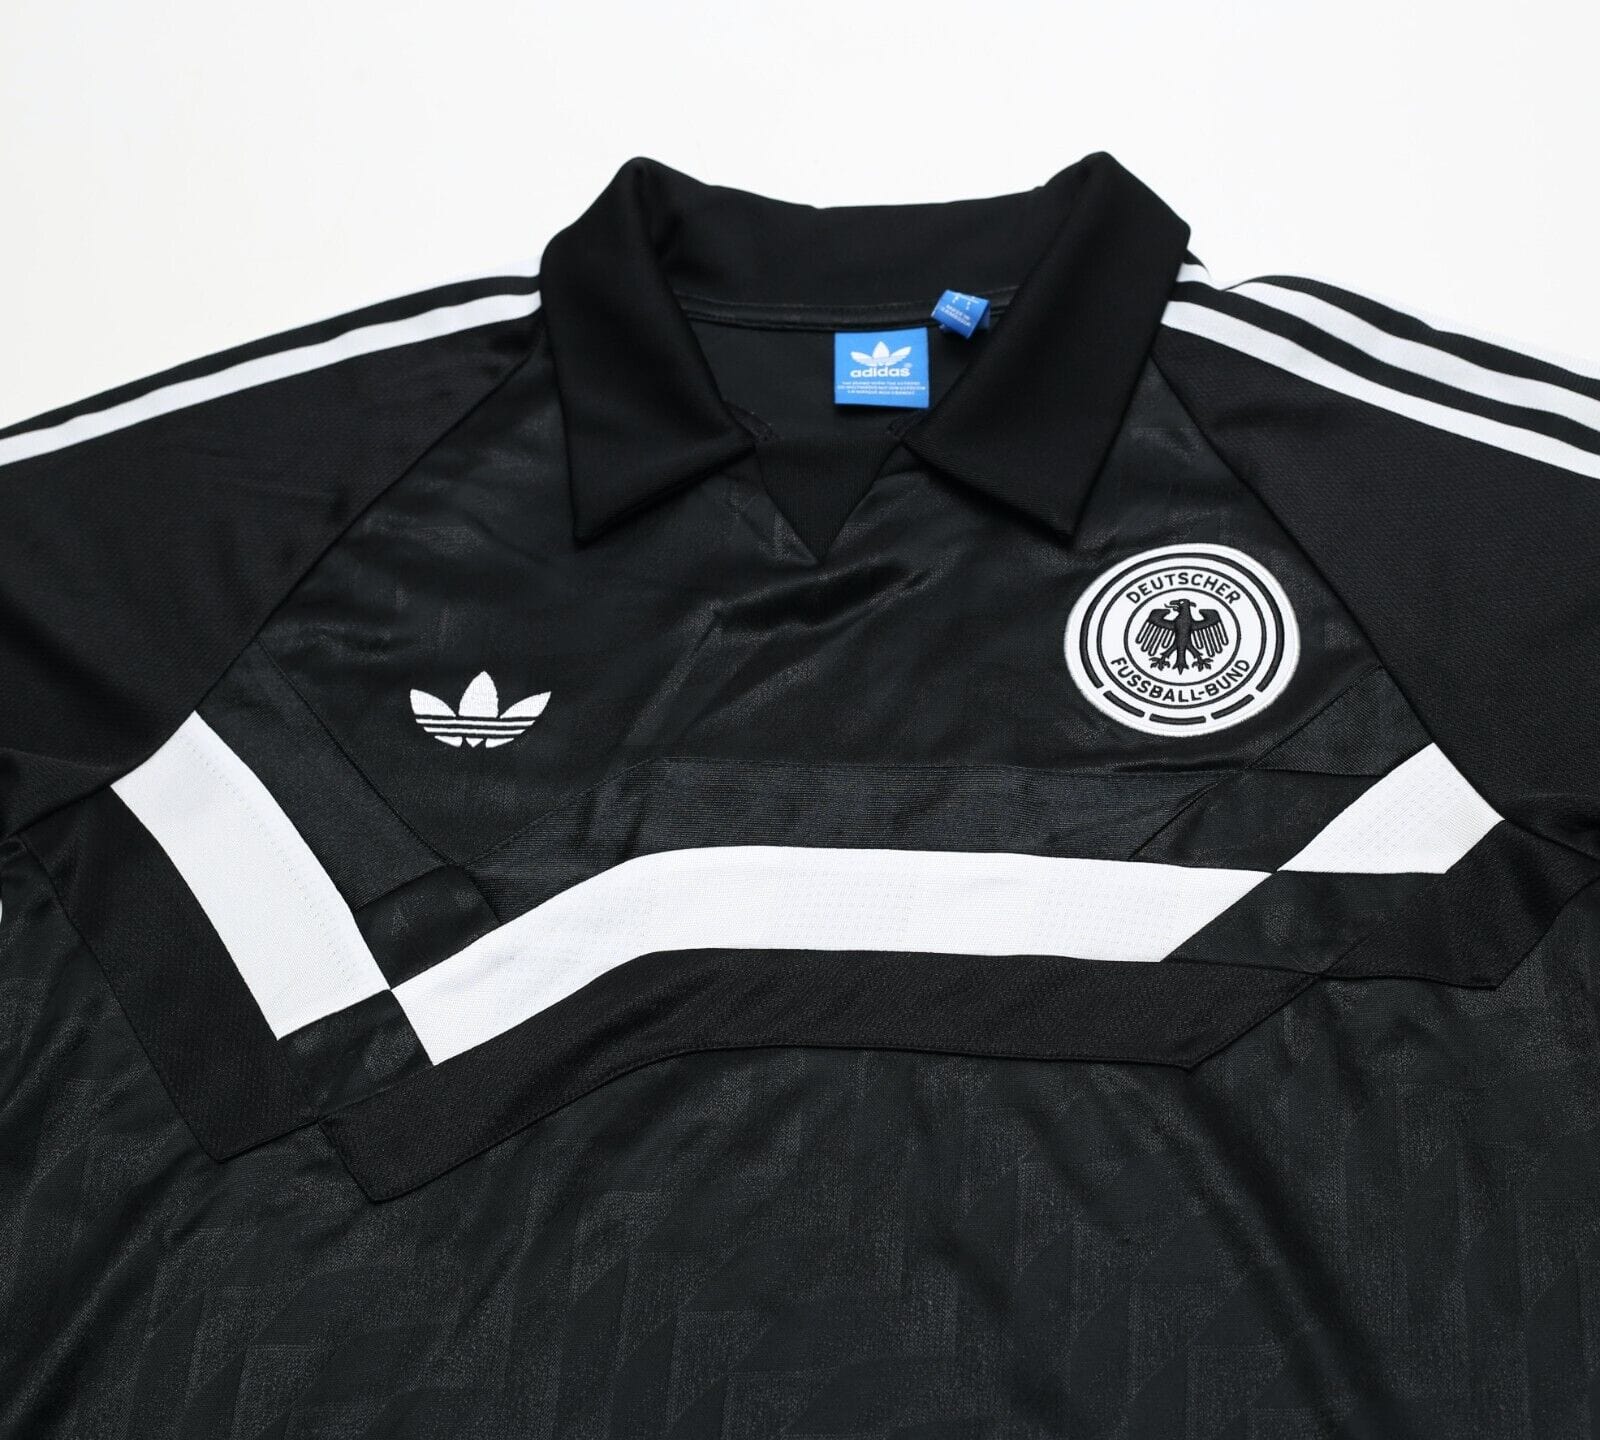 1988/91 WEST GERMANY Italia 90 Retro adidas Originals Football Shirt (M/L)